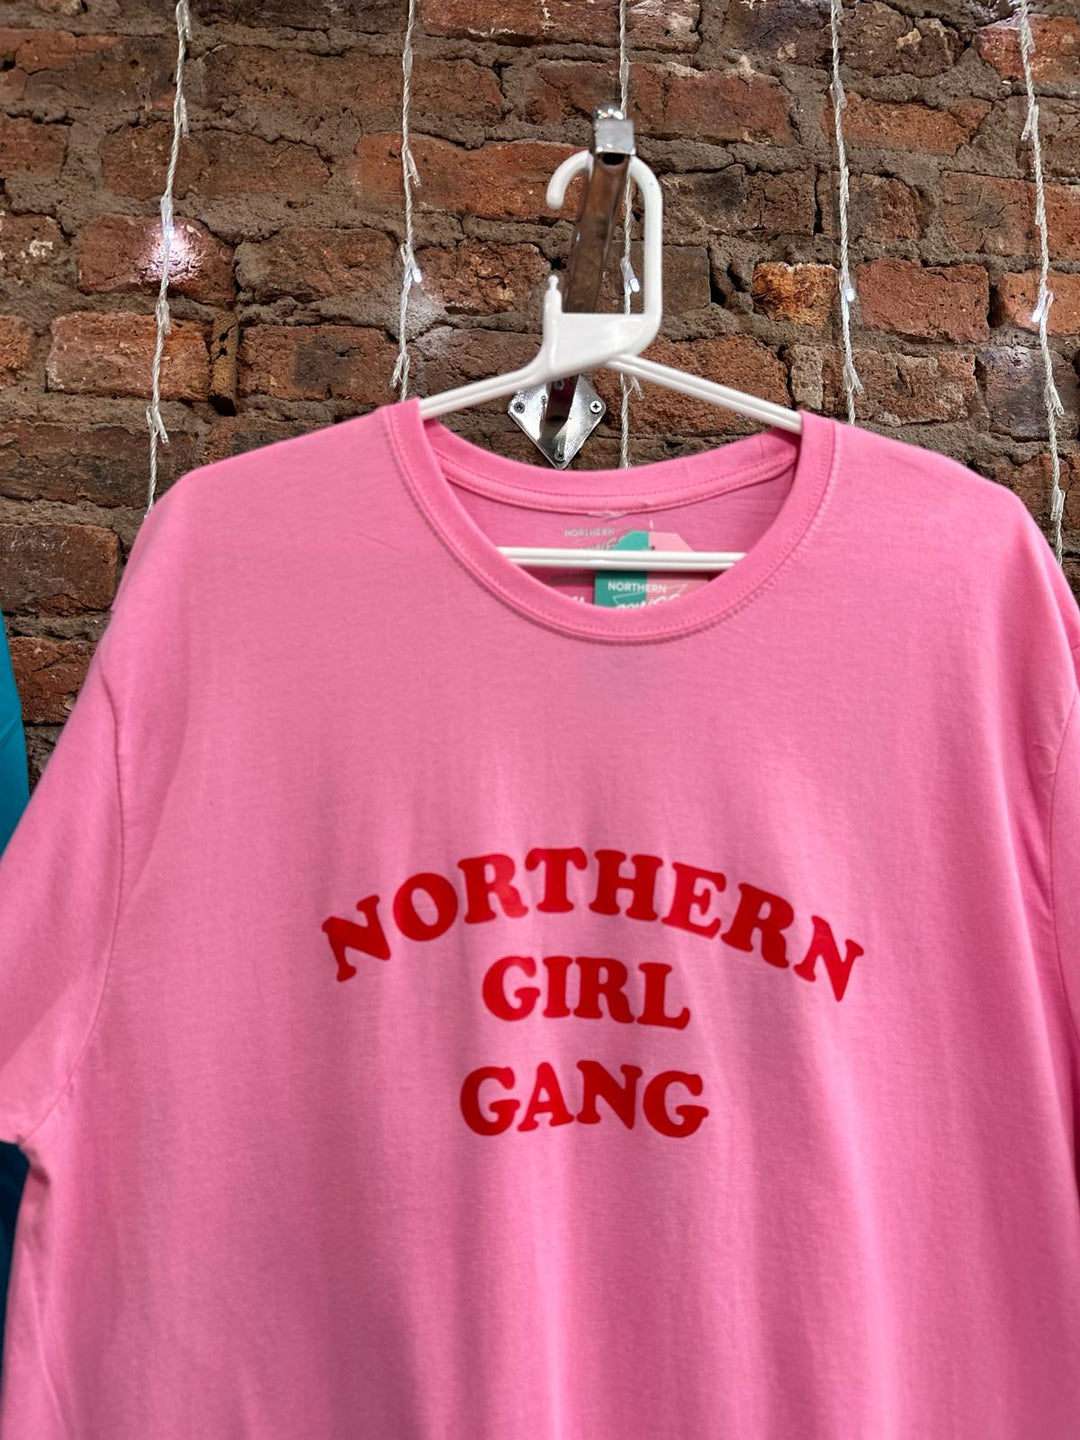 *Northern Girl Gang Pink Tee - XL and 2XL